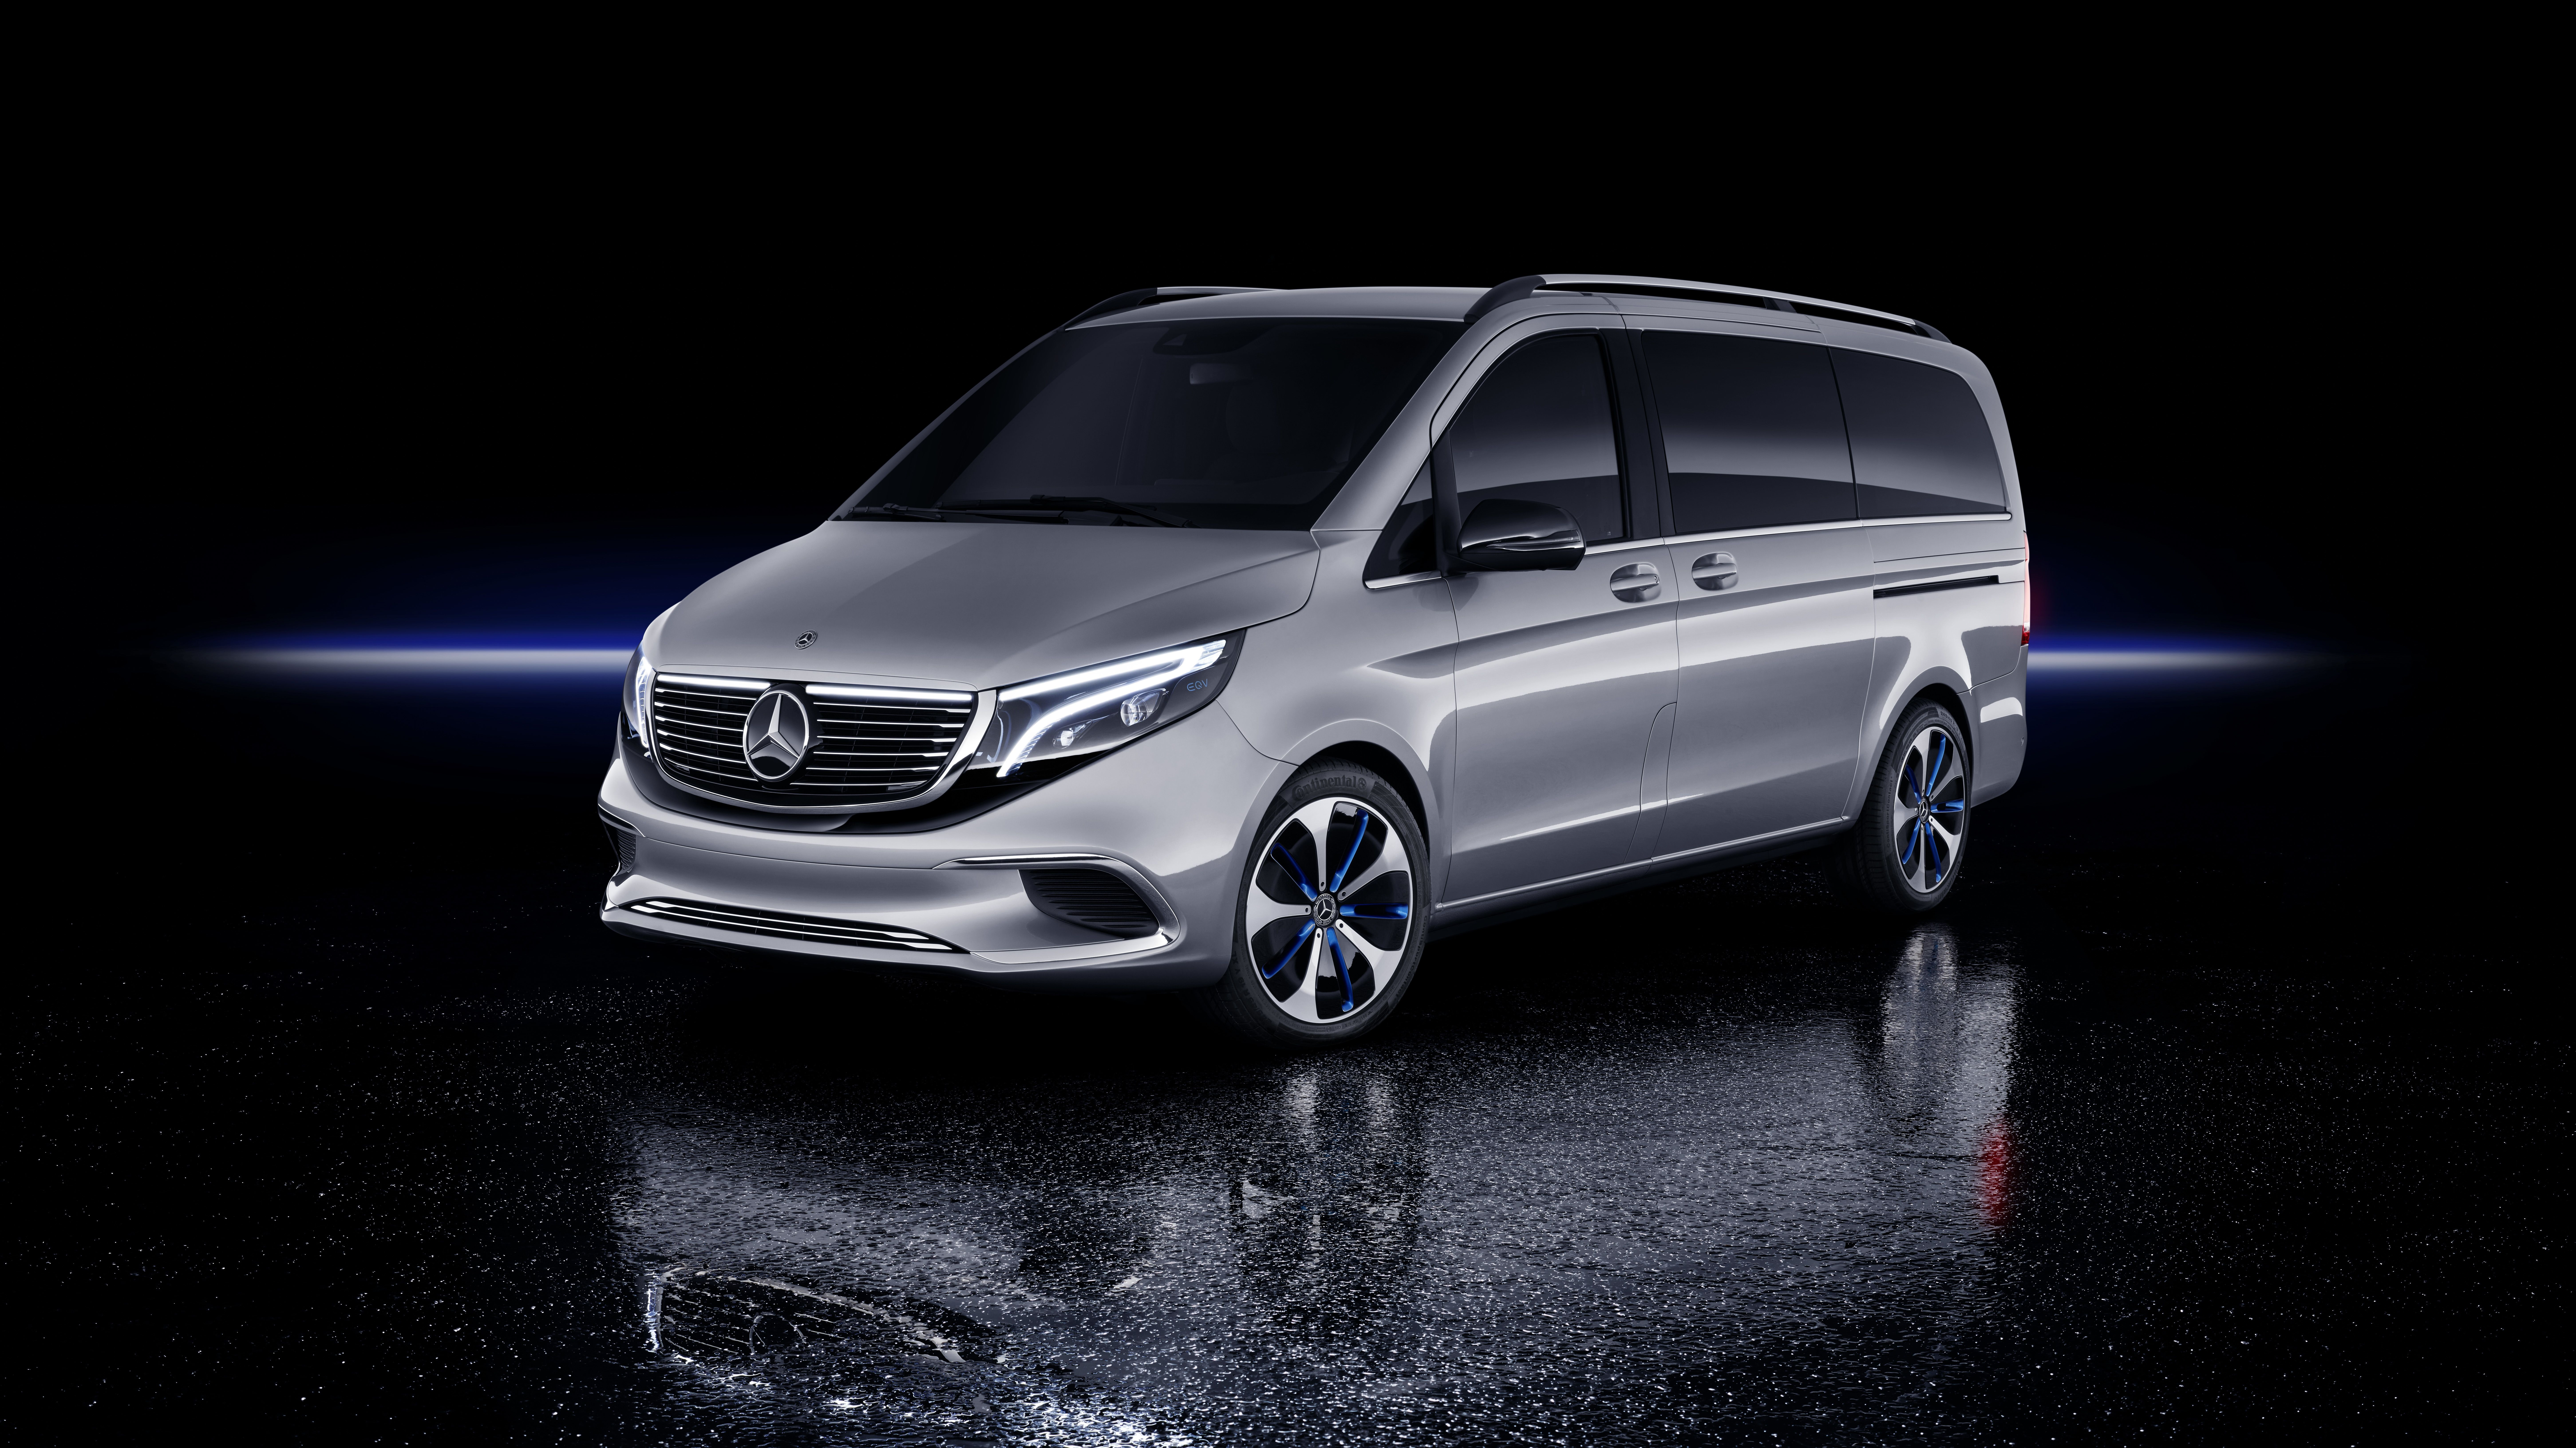 2018 Mercedes Concept EQV Previews the World's First Premium Electric Van